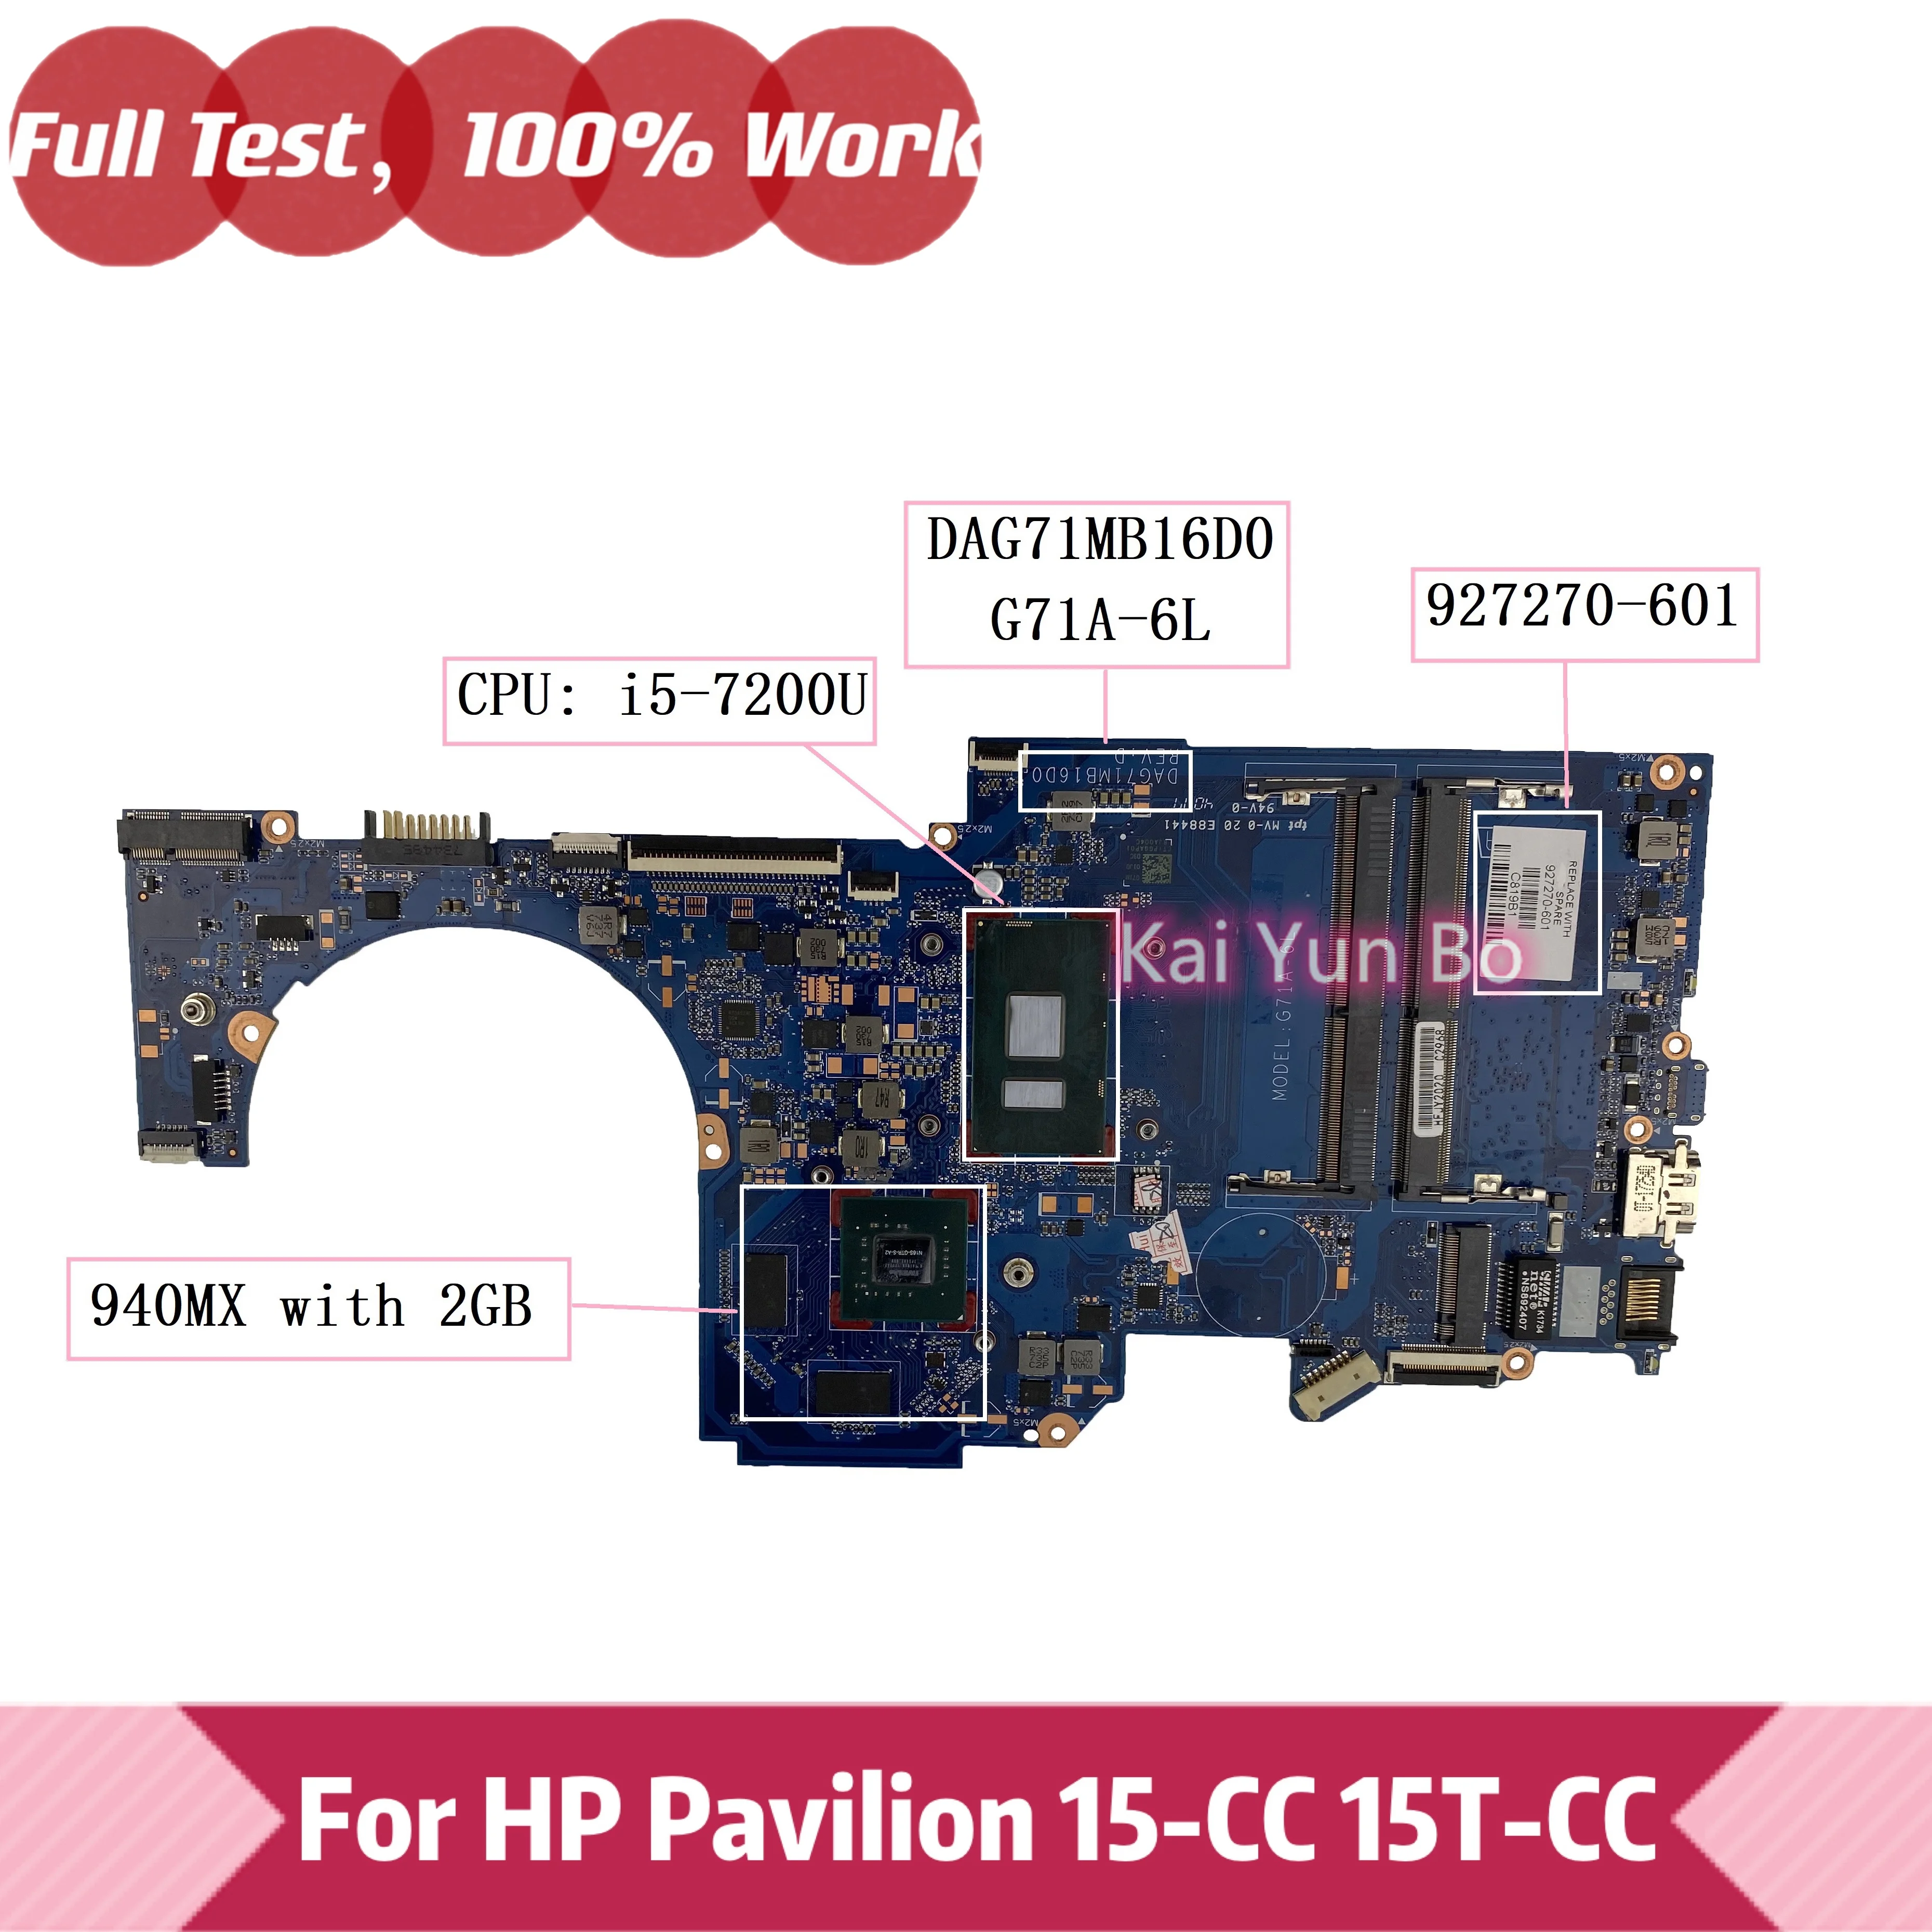 

DAG71MB16D0 For HP PAVILION 14-BK 14-BP 15-CC 15T-CC Laptop Motherboard G71A-6L 927270-601 927270-001 with i5-7200U 940MX 2GB